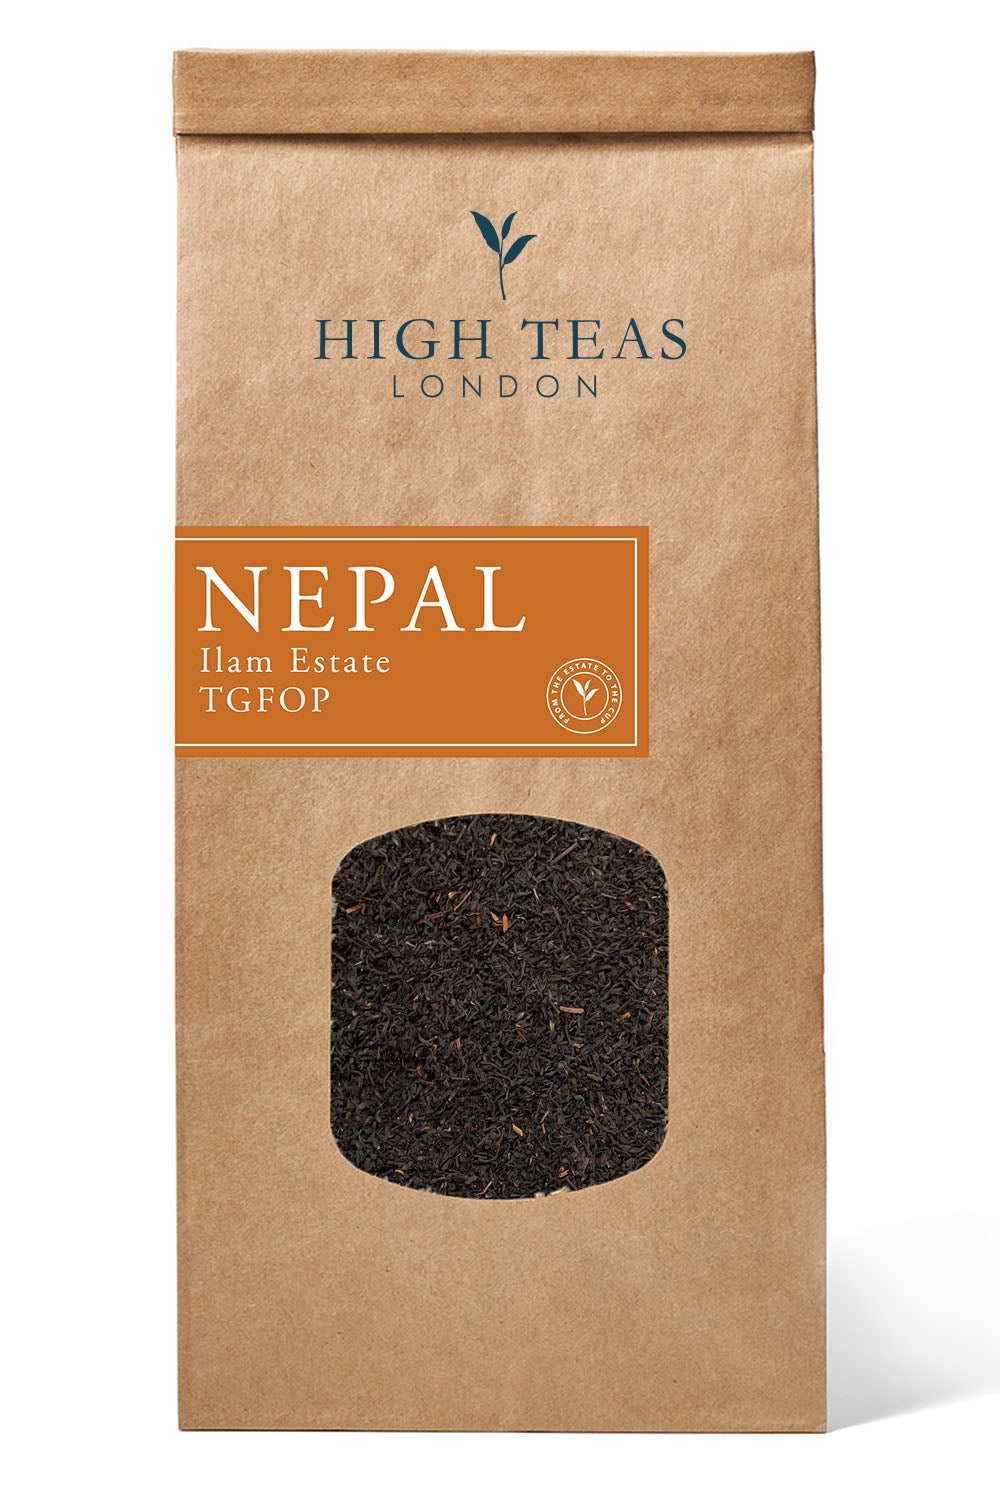 Nepal - Ilam Estate 2nd Flush TGFOP-250g-Loose Leaf Tea-High Teas